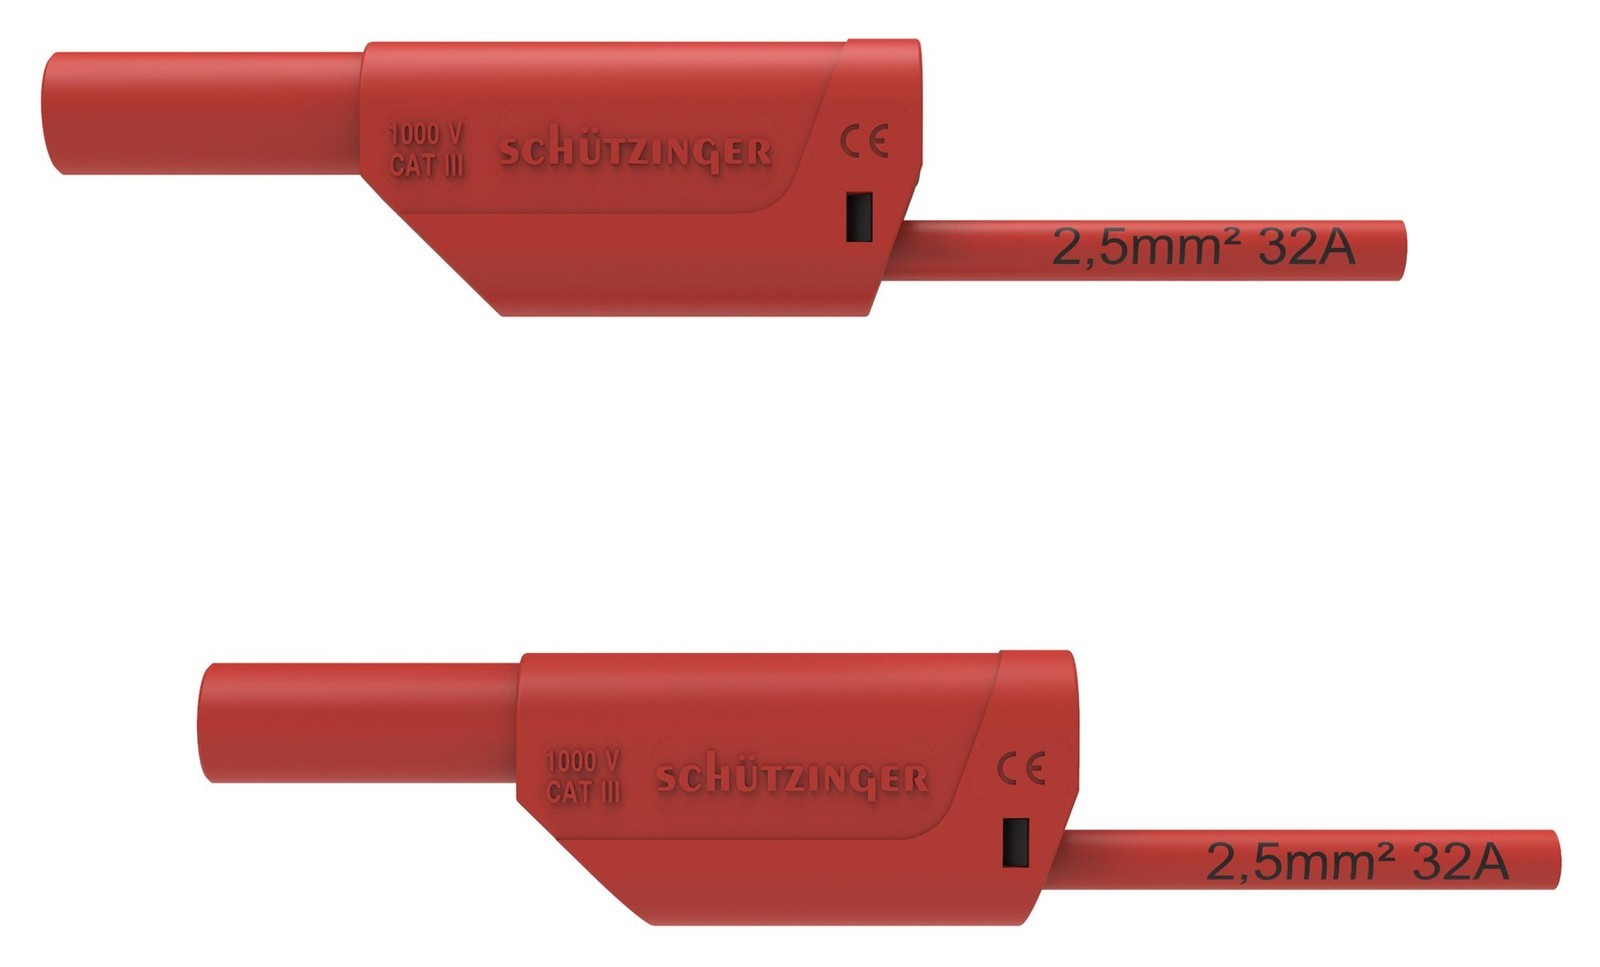 Schutzinger Di Vsfk 8700 / 2.5 / 200 / Rt 4mm Banana Plug-Sq, Shrouded, Red, 2M